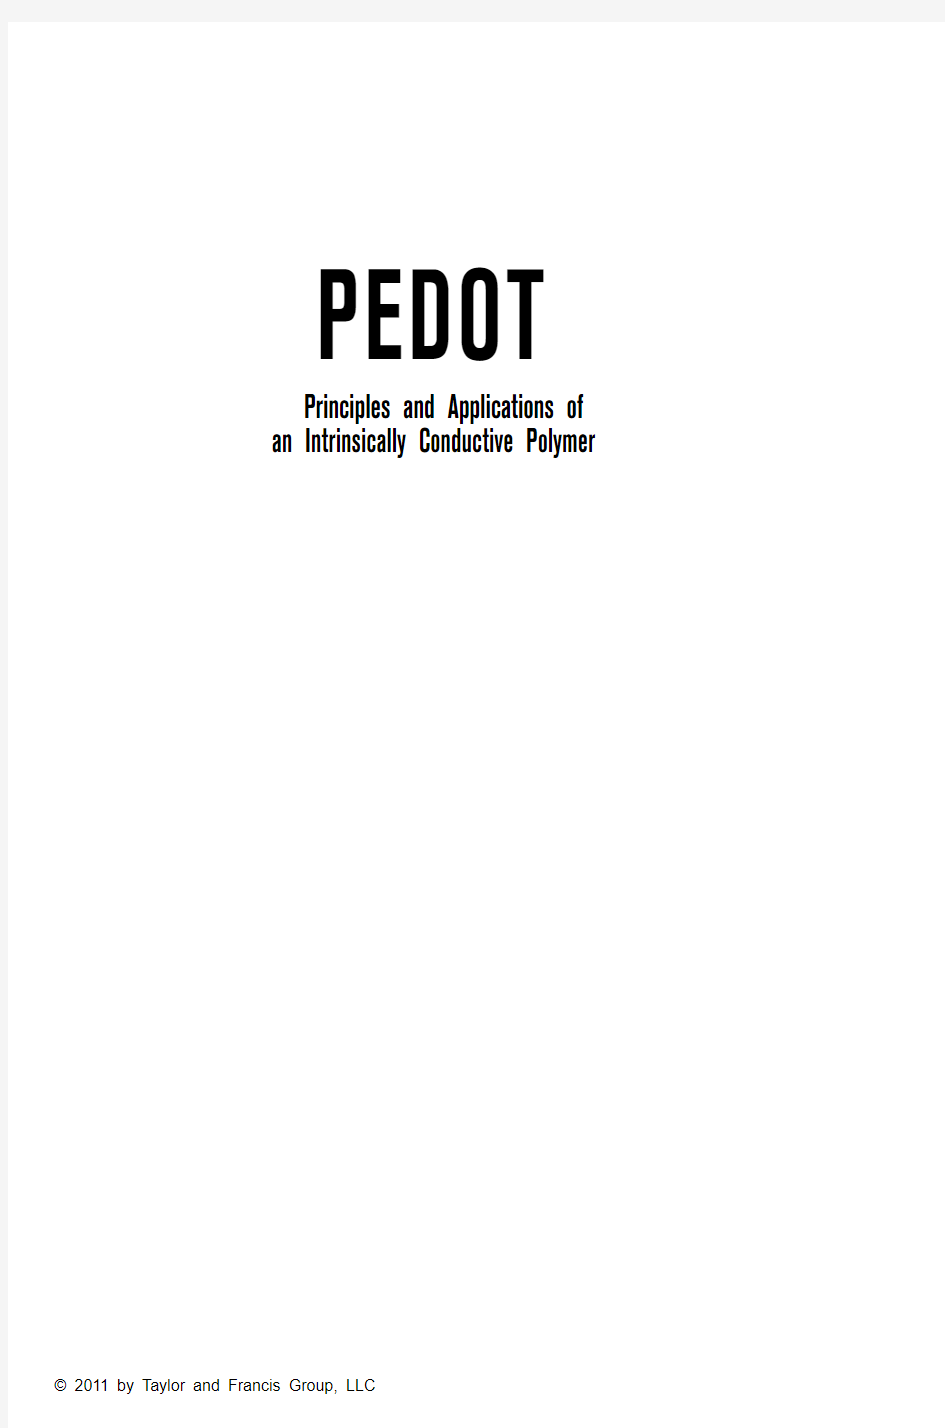 PEDOT as a Conductive Polymer-Principles and Applications(1)